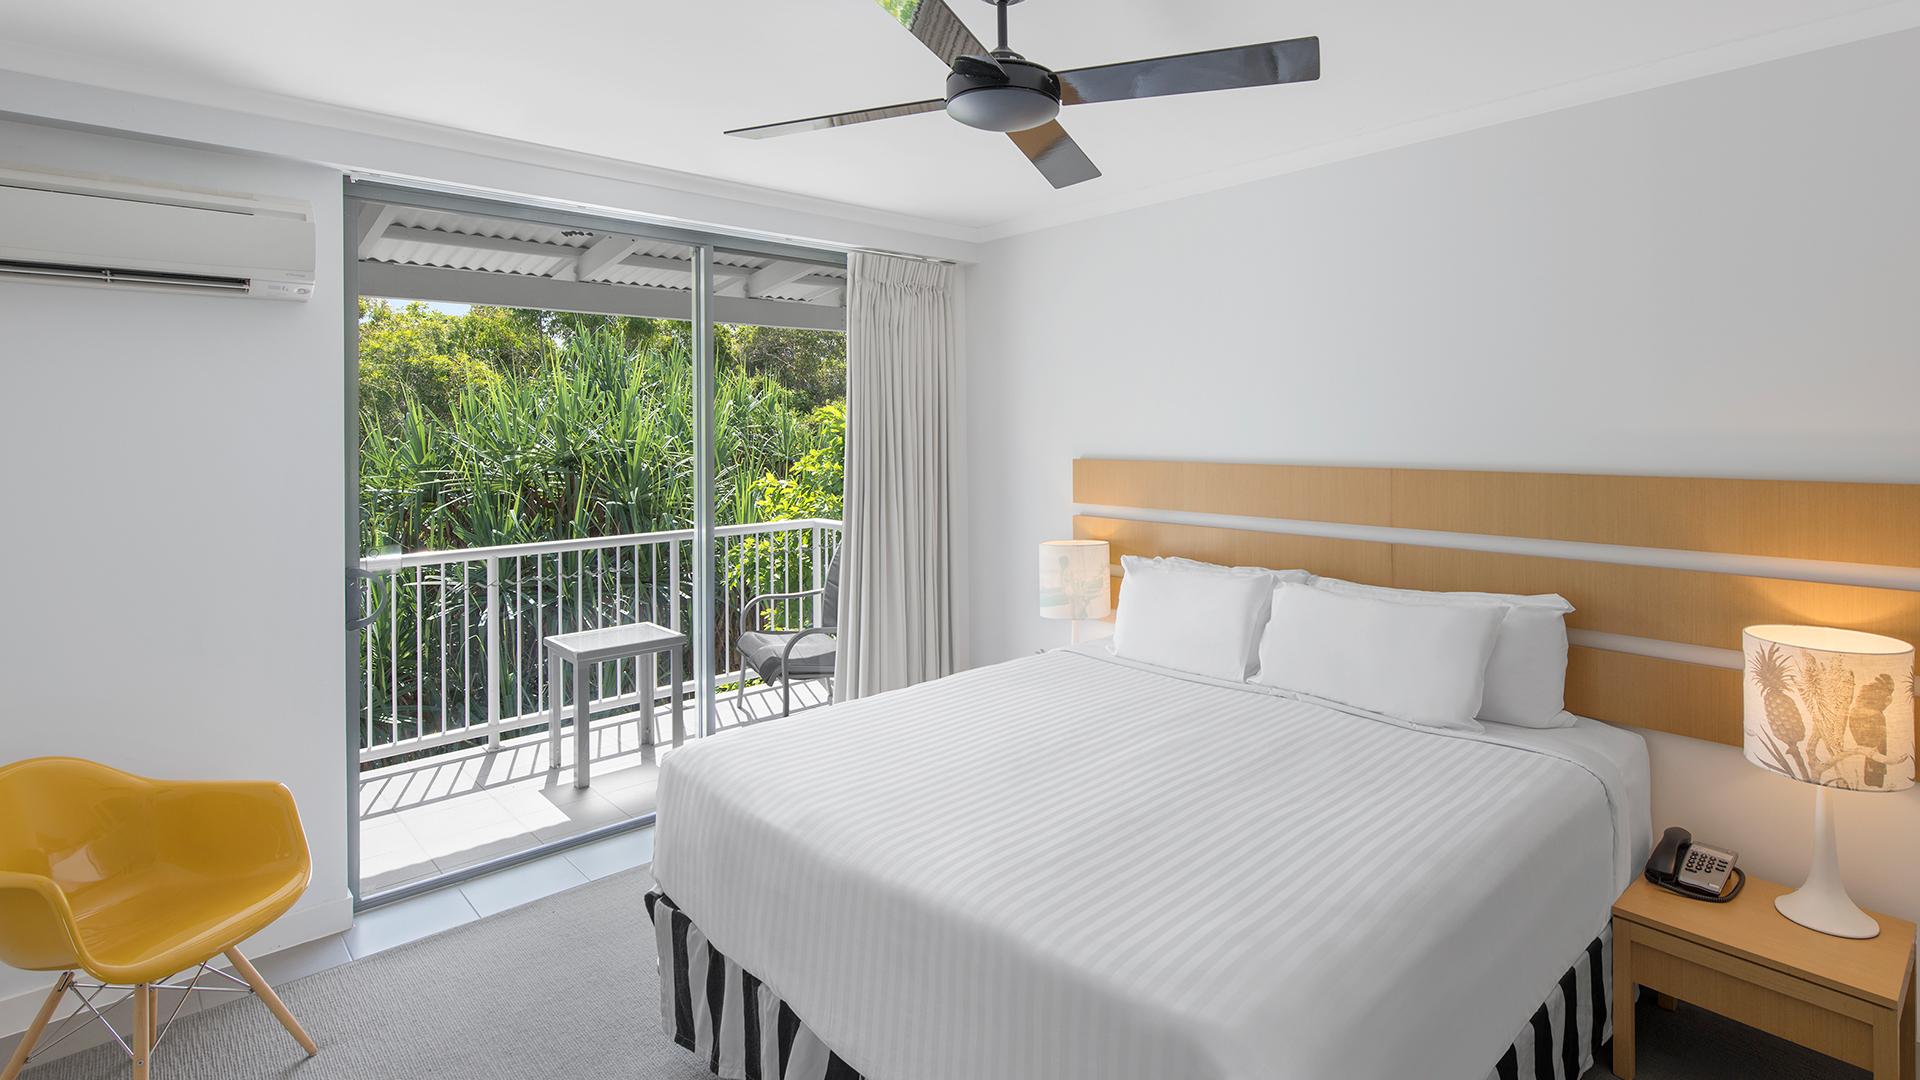 Hotel Room Garden View image 1 at Oaks Port Douglas Resort by Douglas Shire, Queensland, Australia